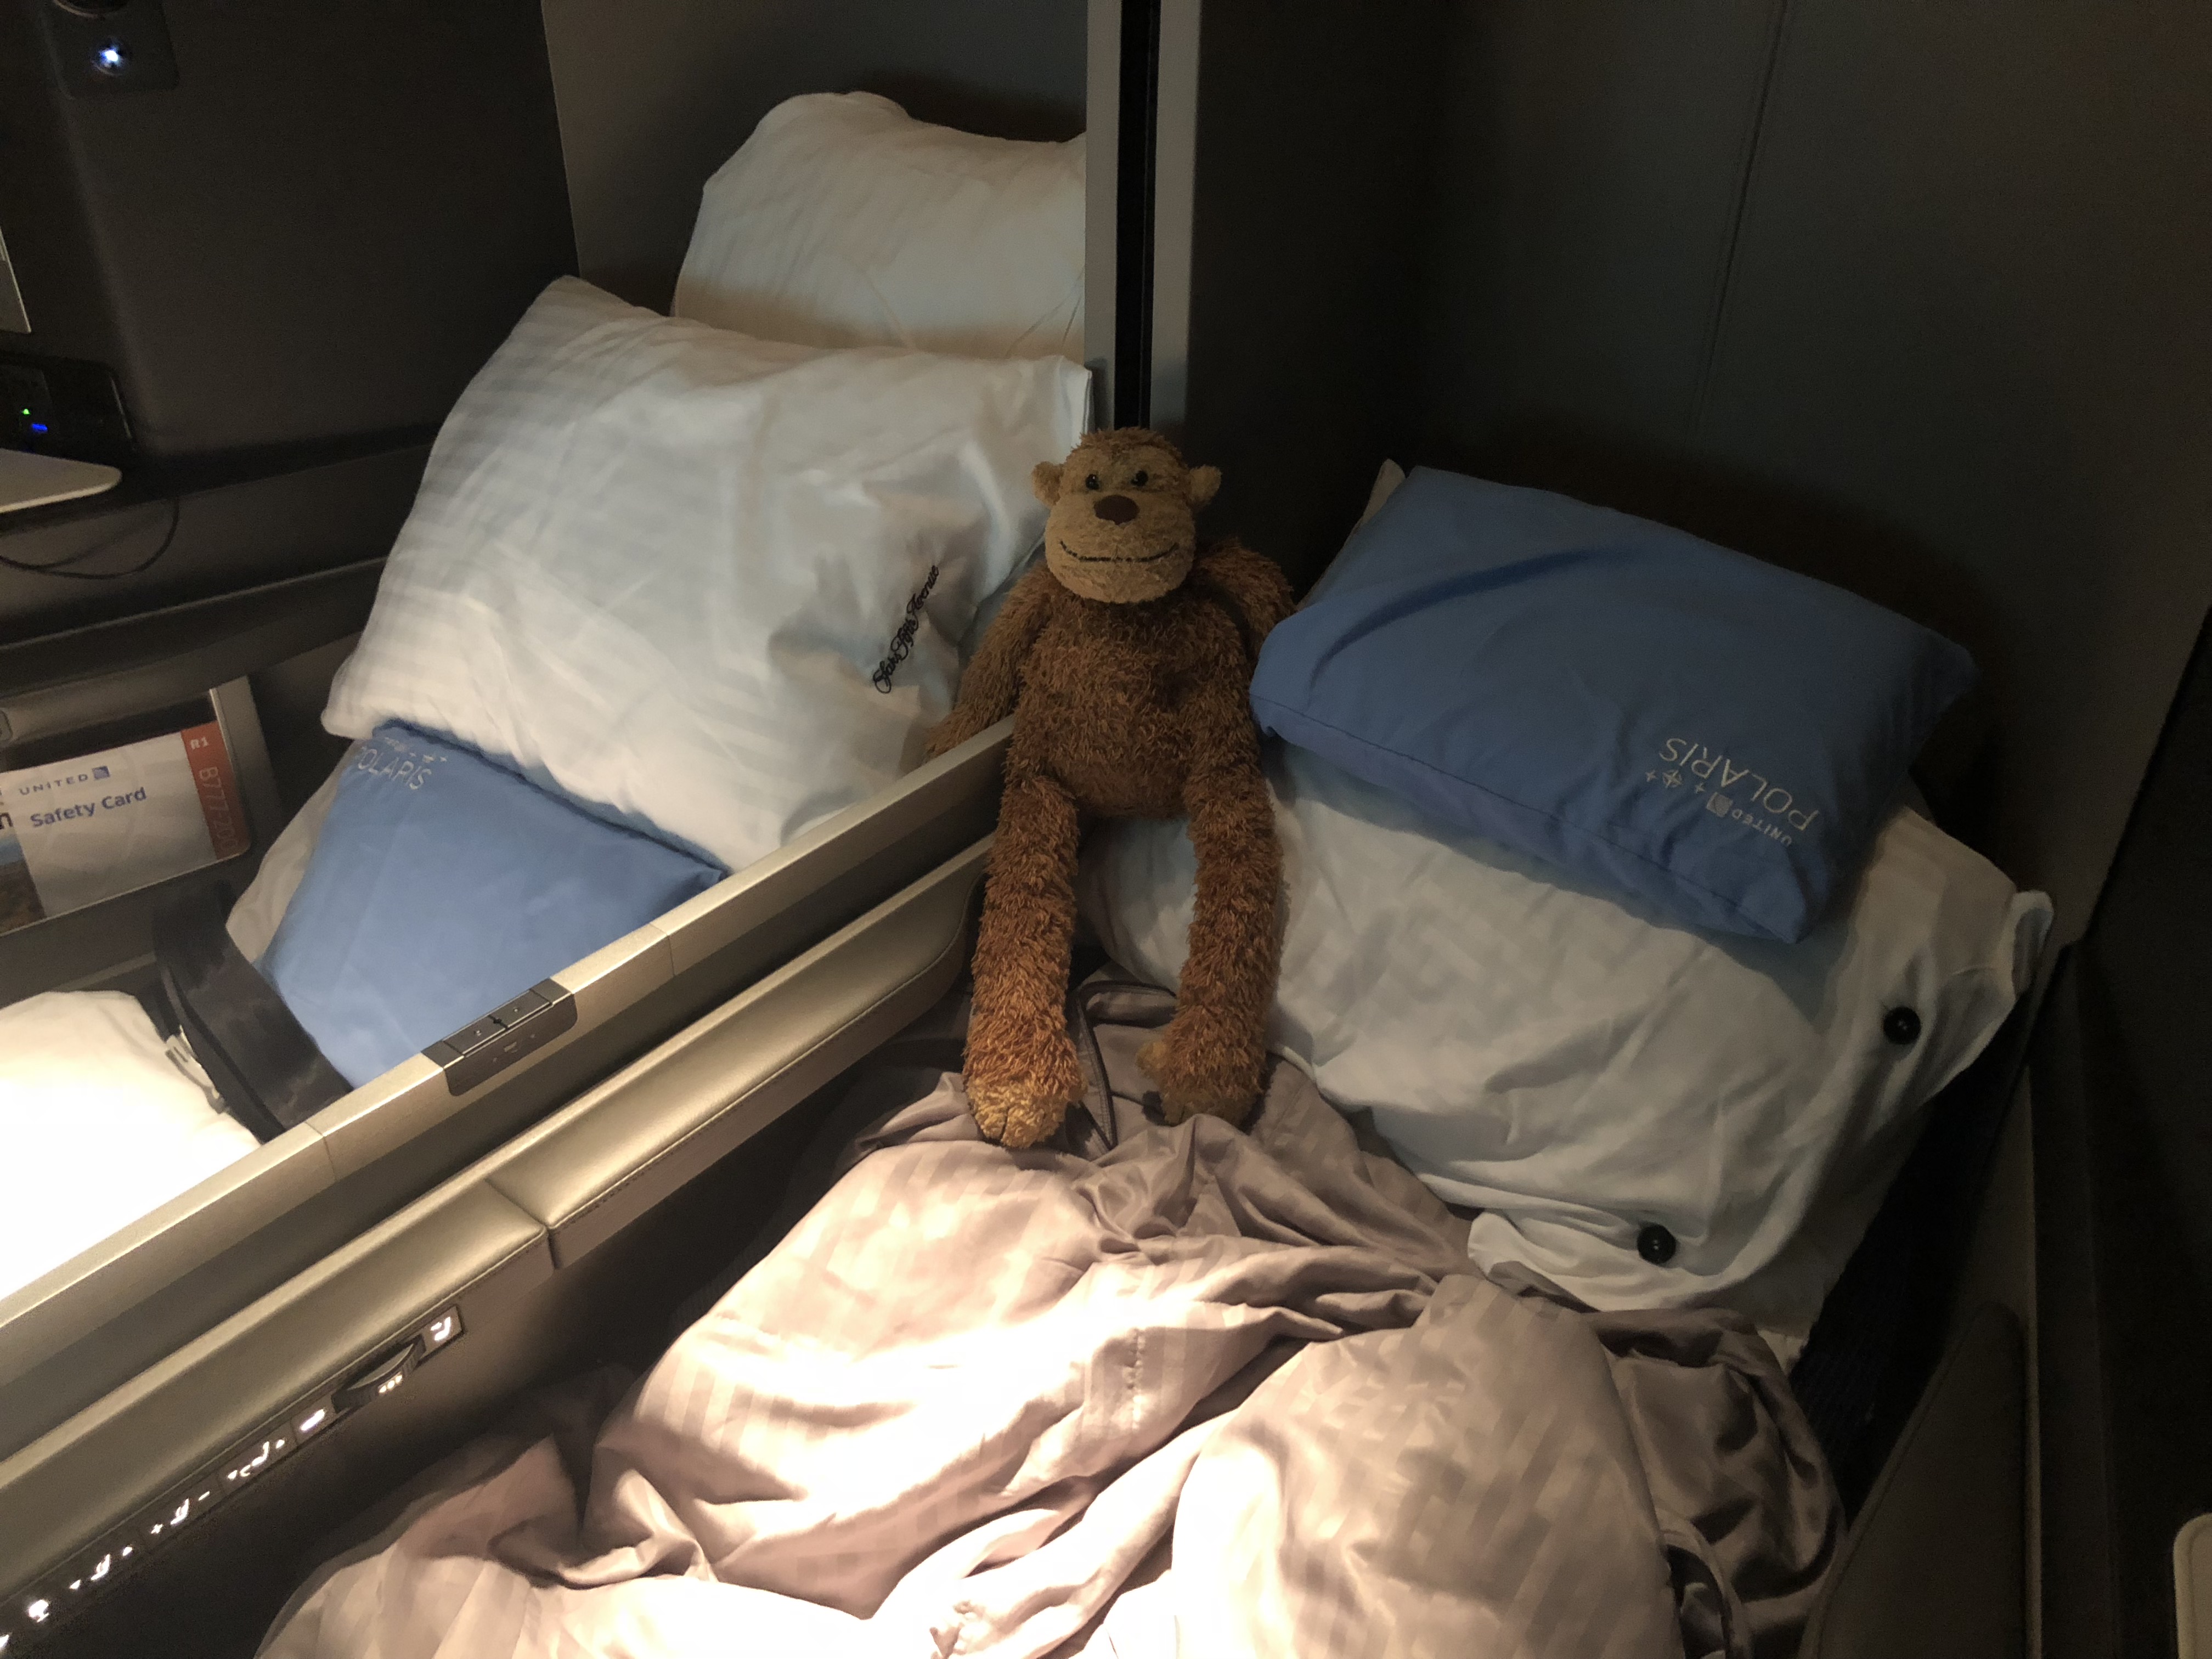 a stuffed monkey on a bed